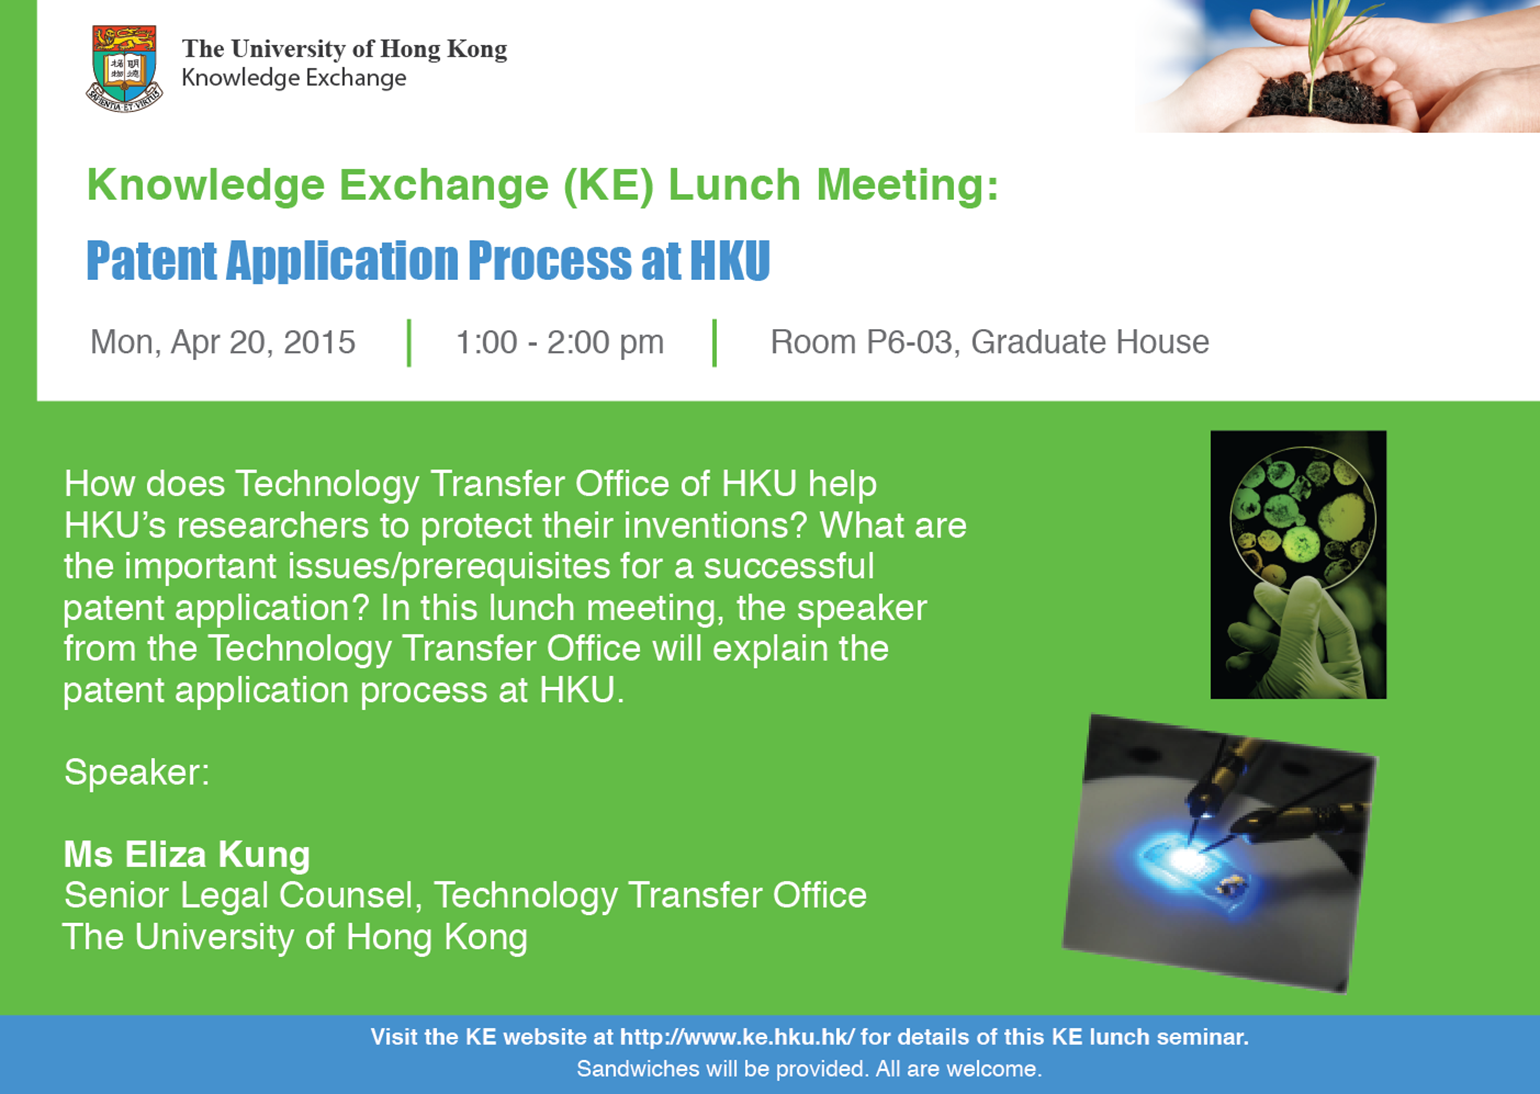 KE lunch meeting - Patent Application Process at HKU